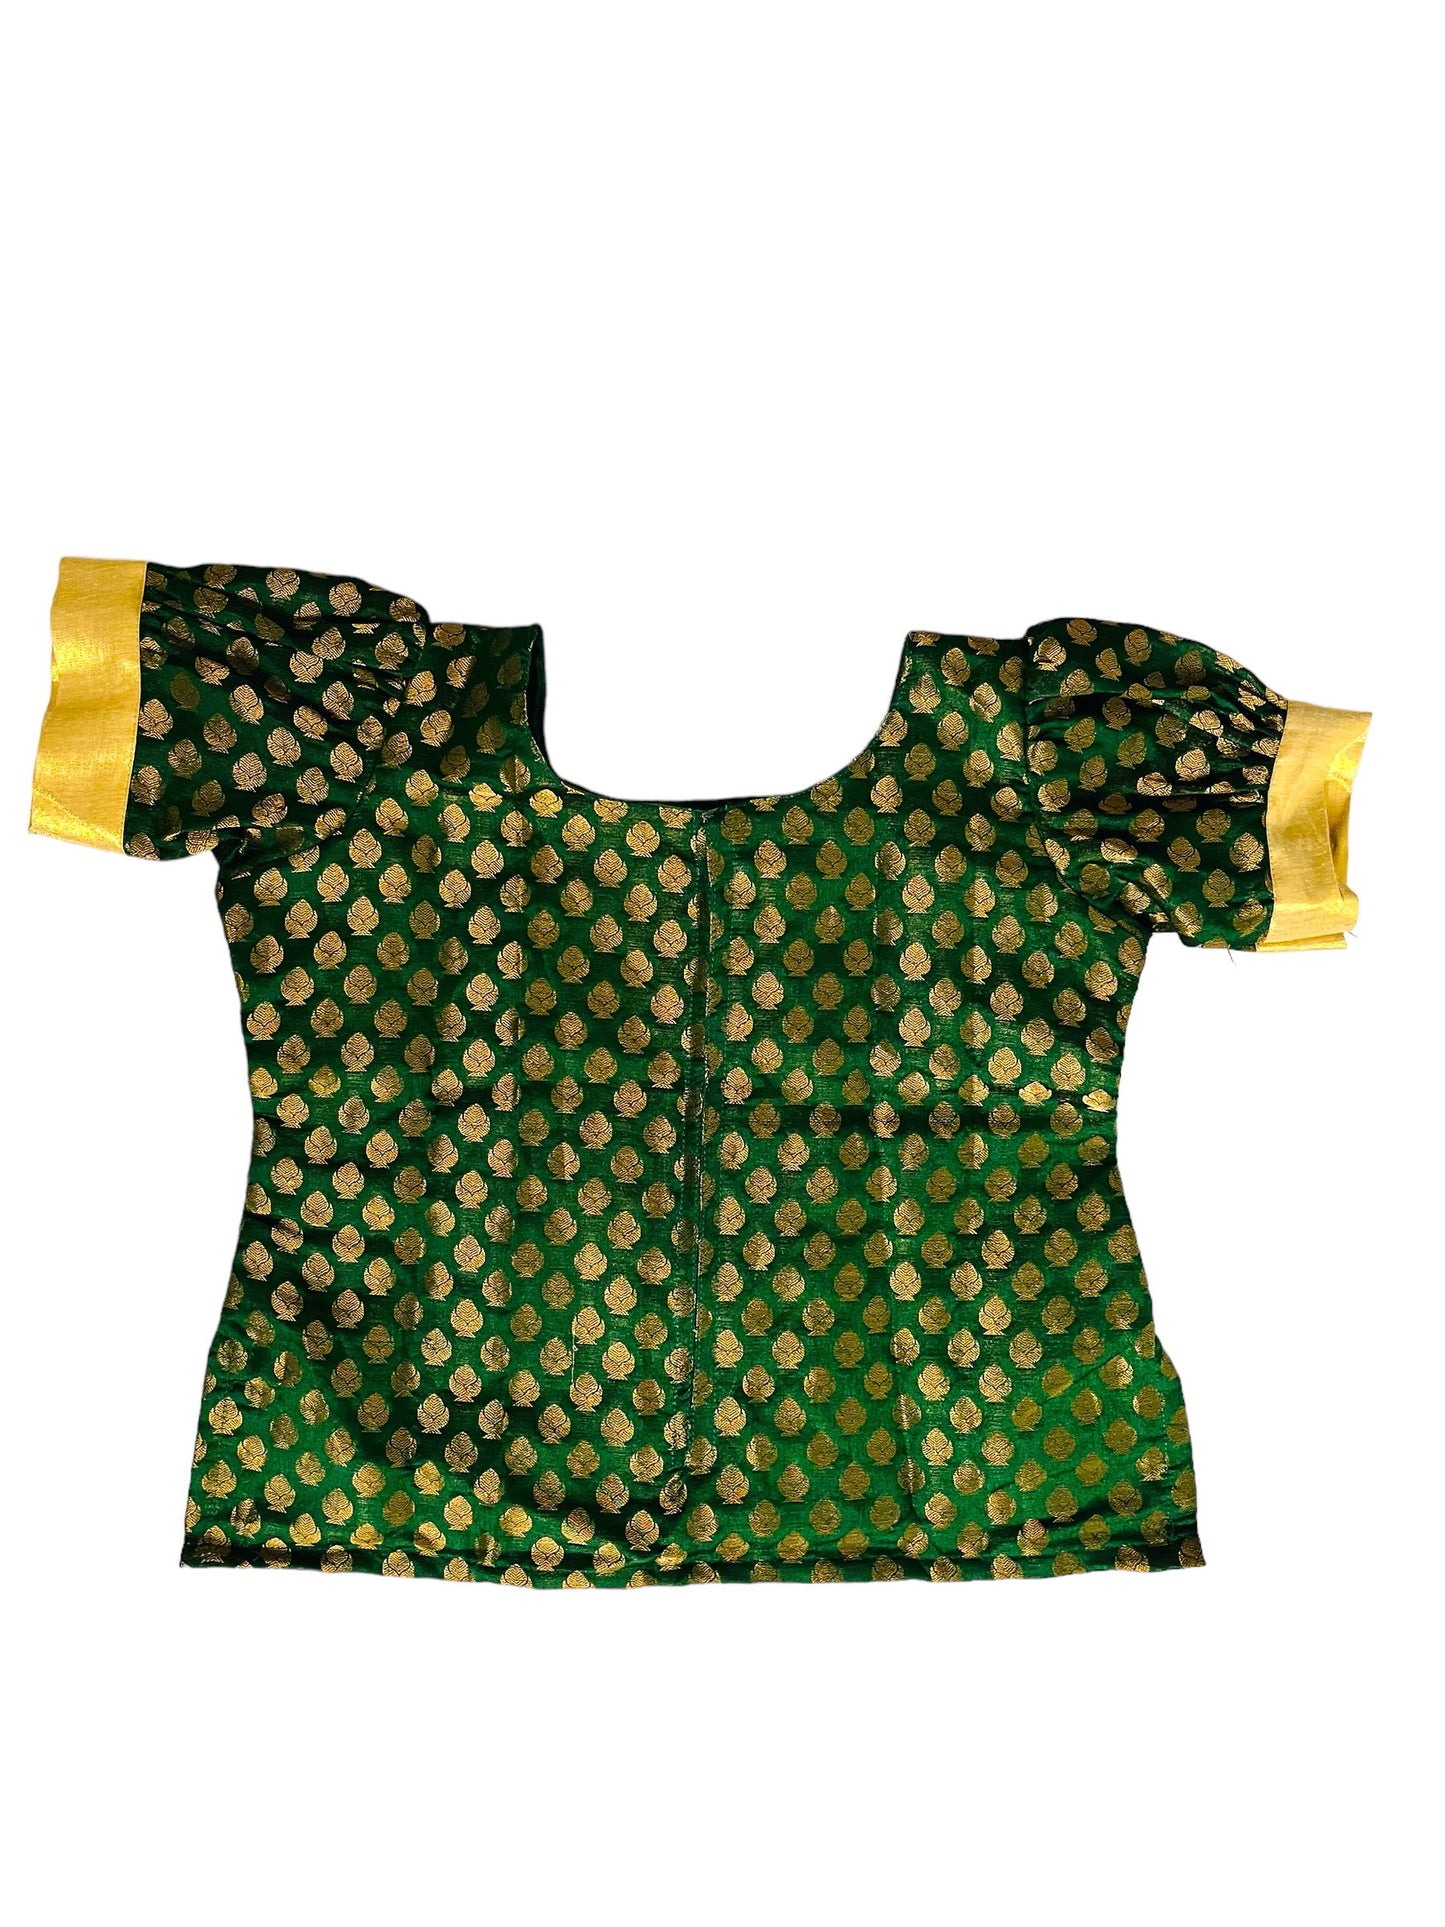 Small girls Pattu Pavada |Green gold Skirt blouse | Kerala  Onam Dawani|| | Indian dress|Kids Pattupavada| Age  4-5 | Kerala Saree